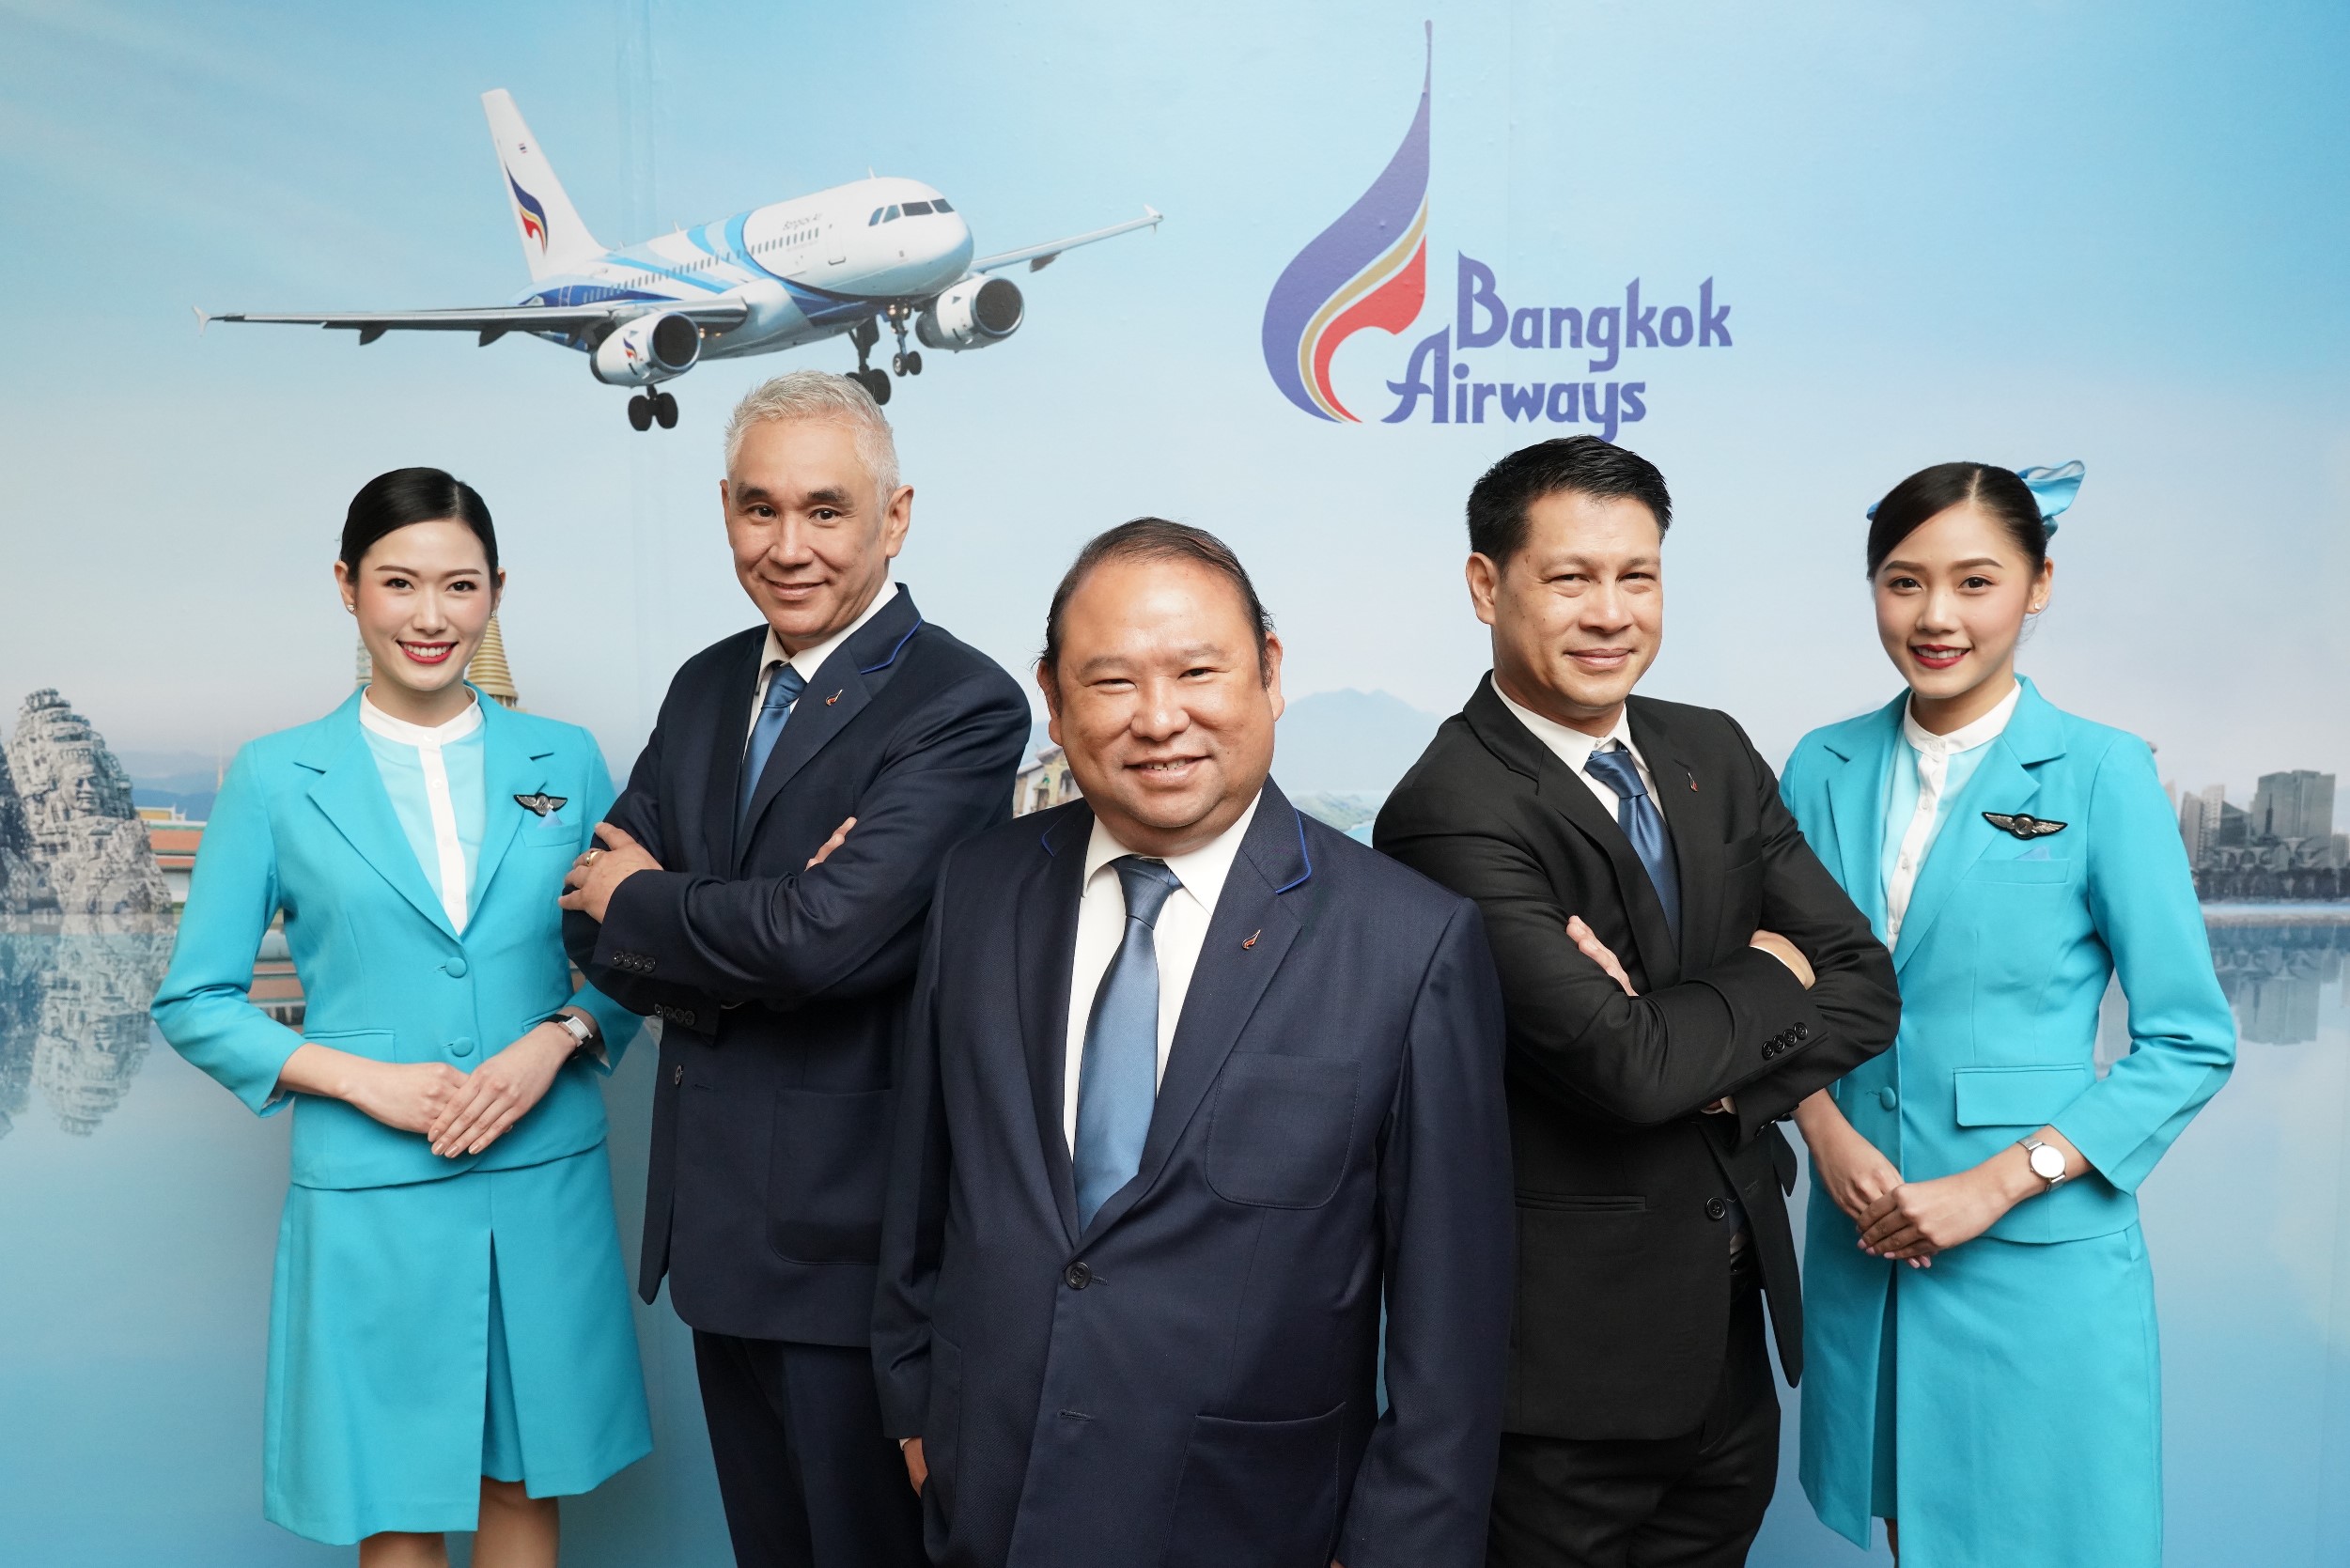 Bangkok Airways a big money spinner